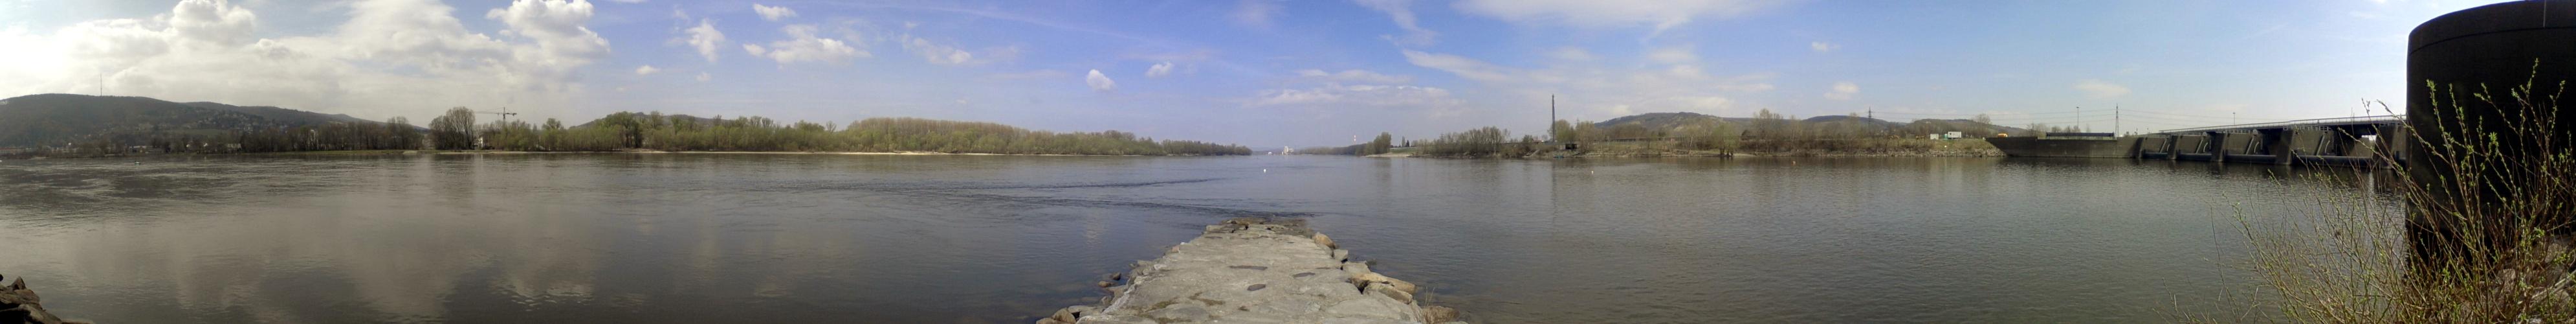 Anfang der Donauinsel.